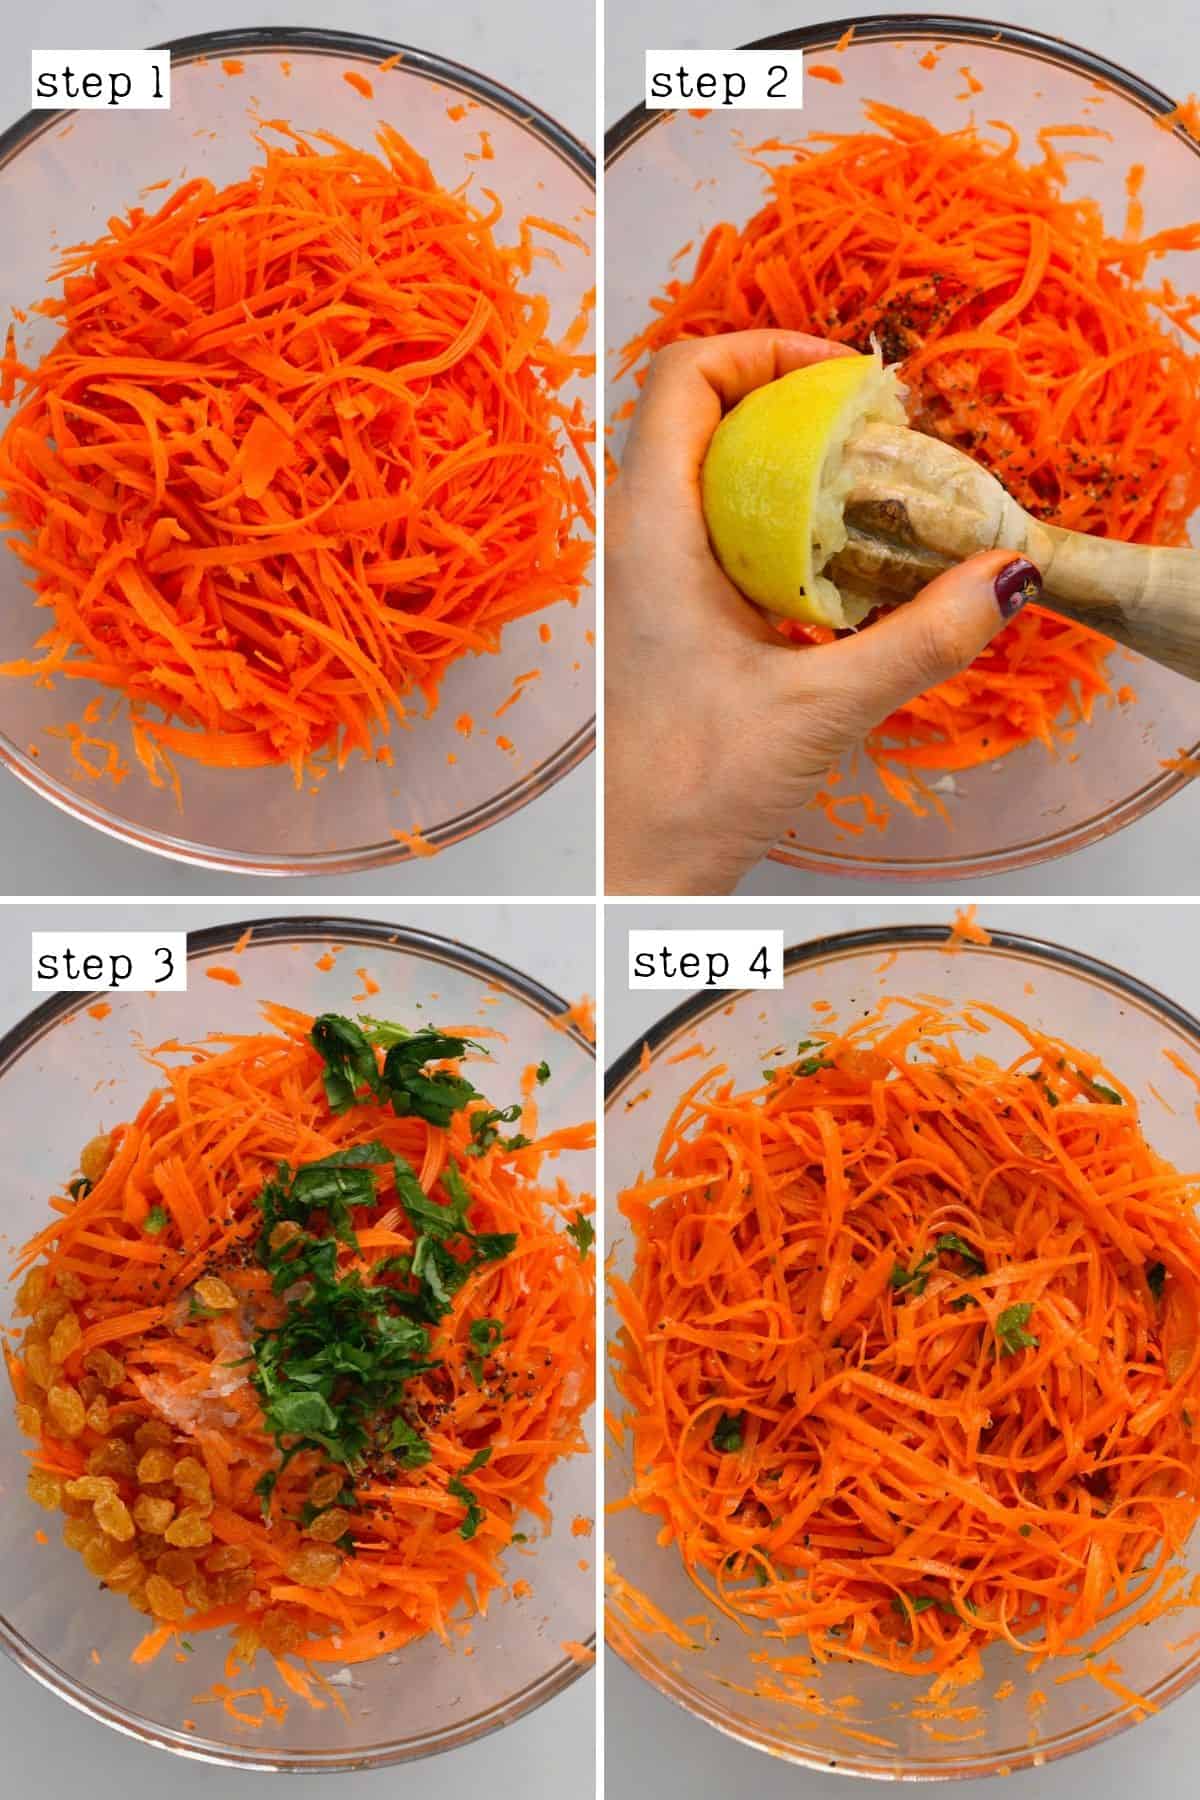 Steps for making carrot salad